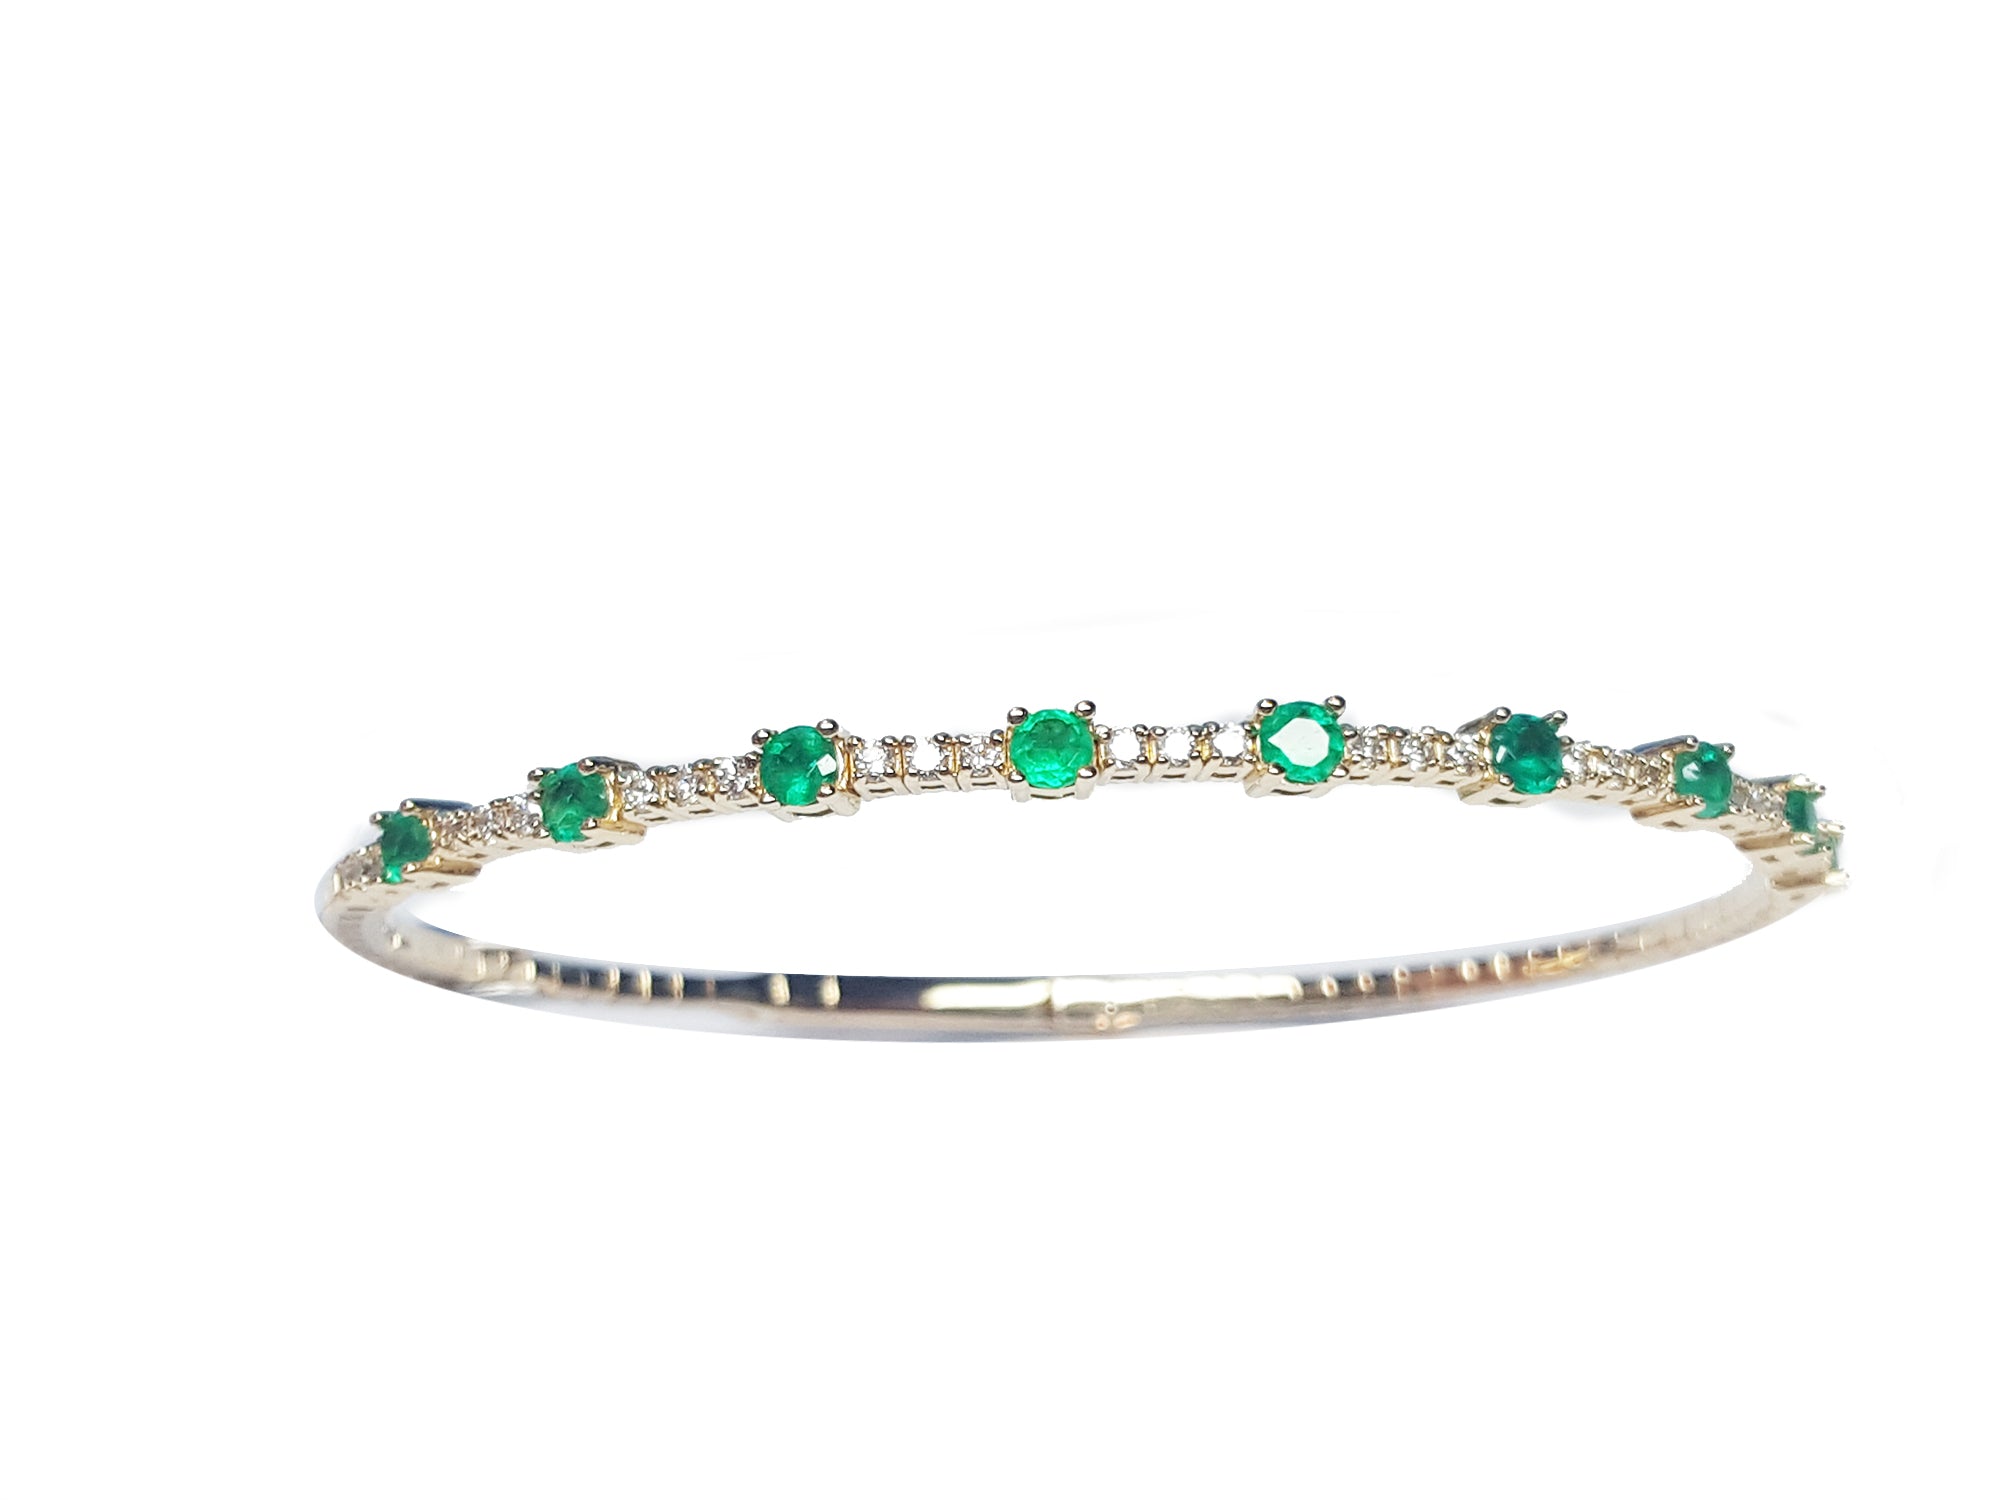 Emerald bangle bracelet